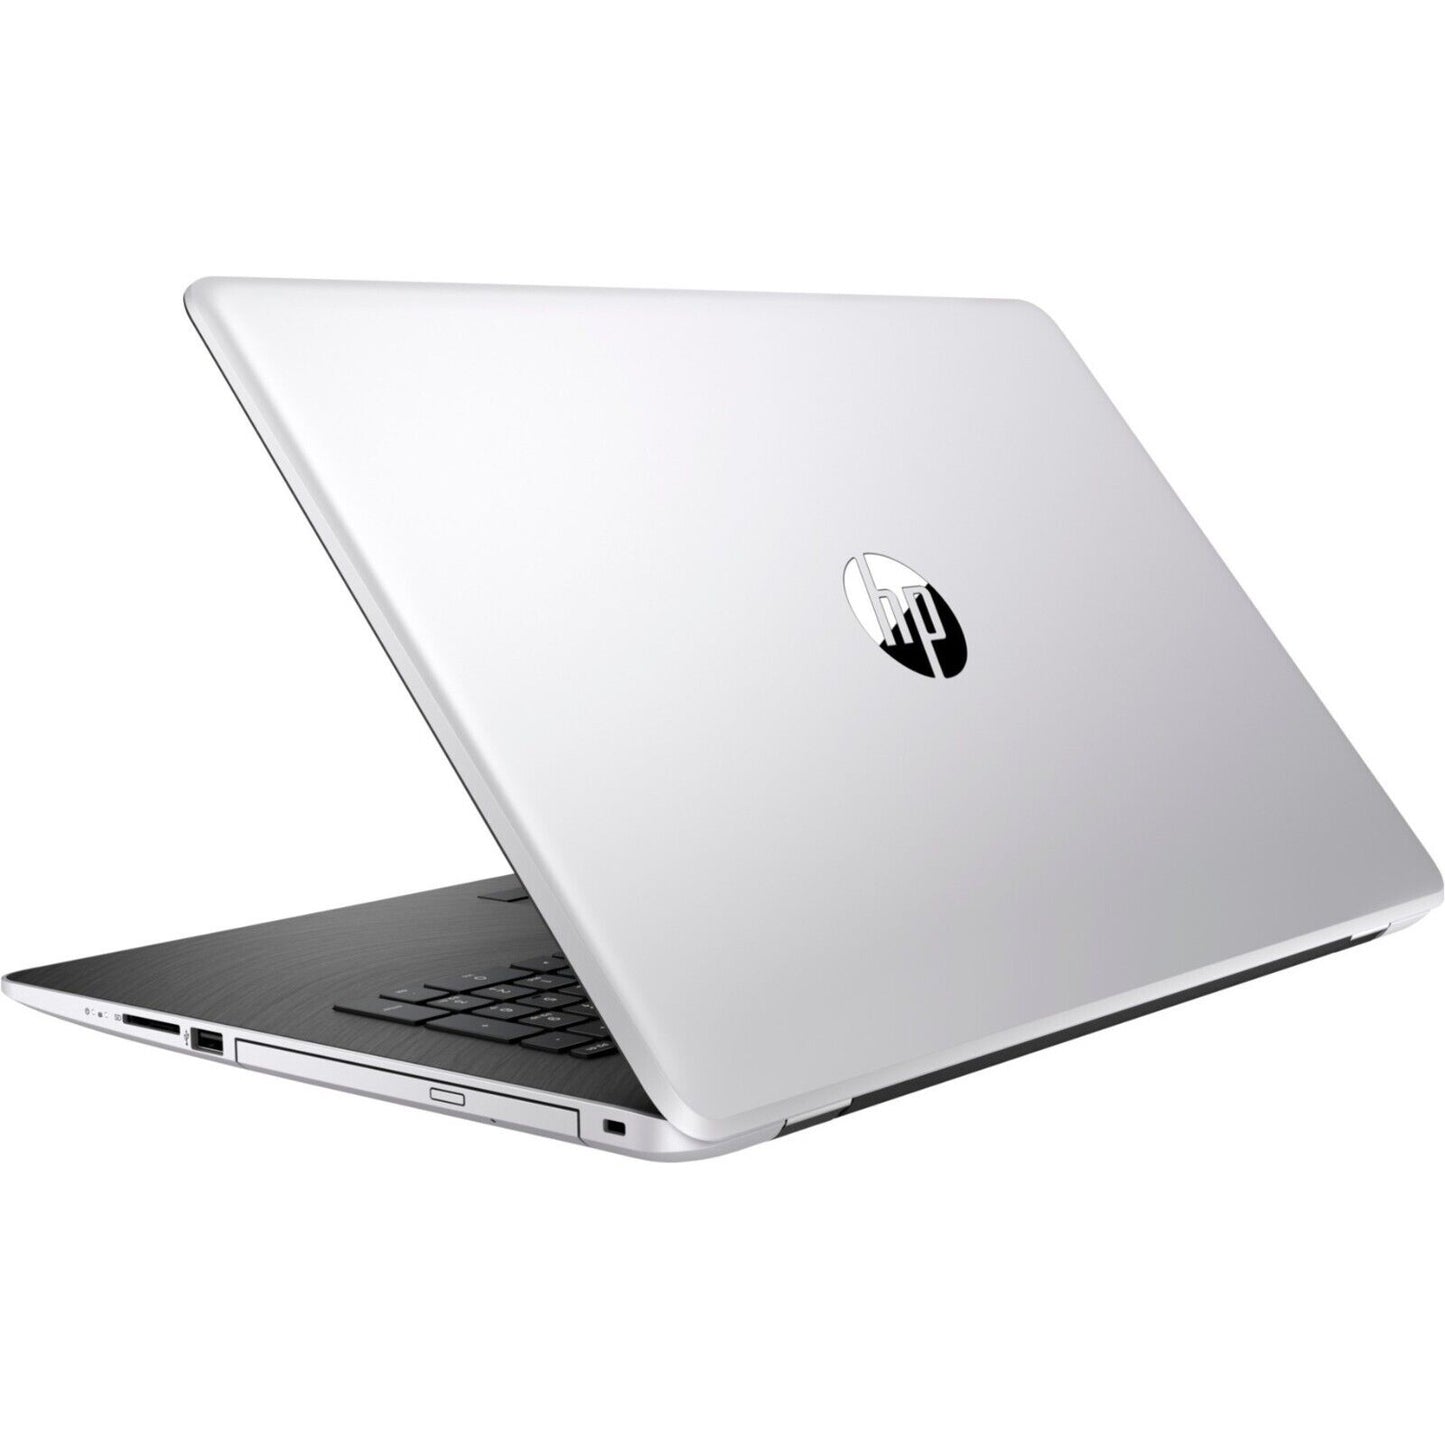 HP Laptop 3TP60UA#ABA - AMD A12 9720P / 2.7 GHz - Win 10 Home 64-bit - Radeon R7